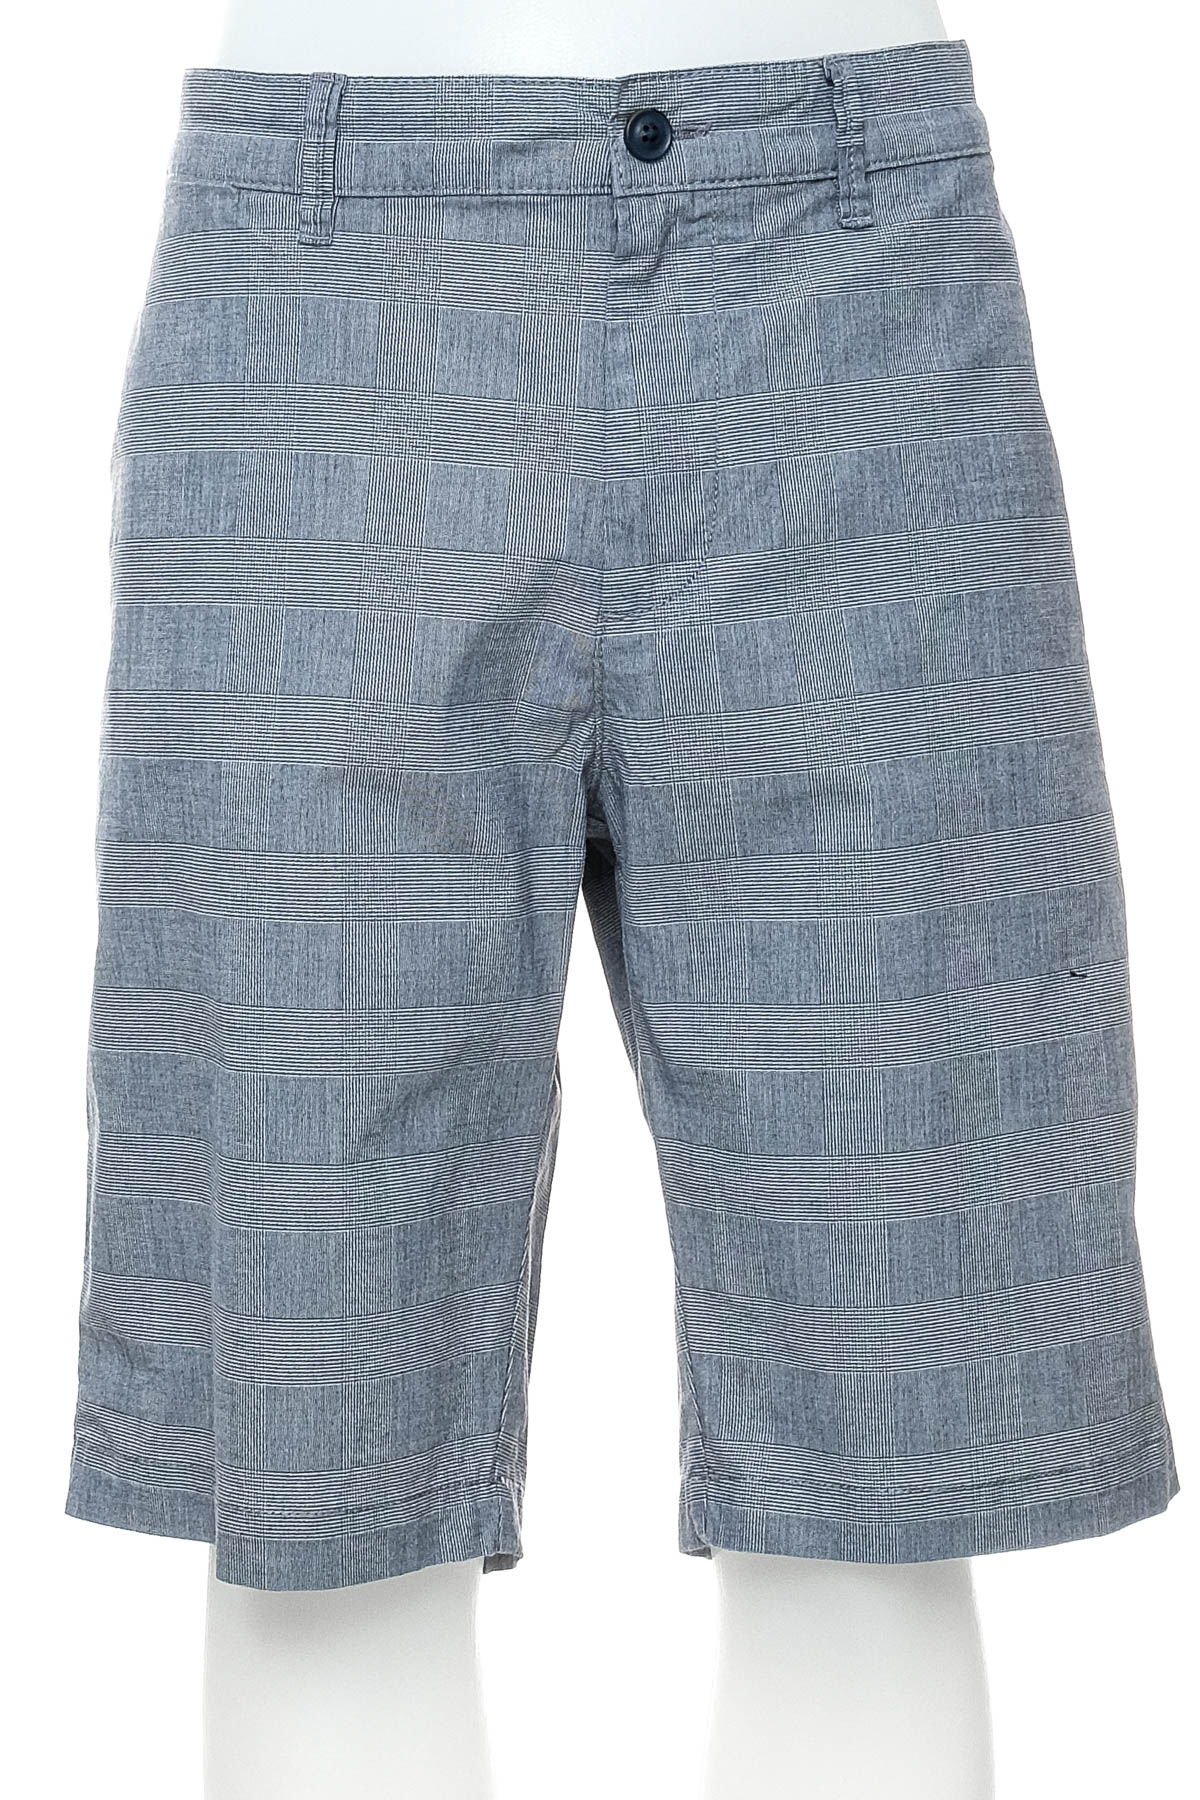 Men's shorts - Bexleys - 0